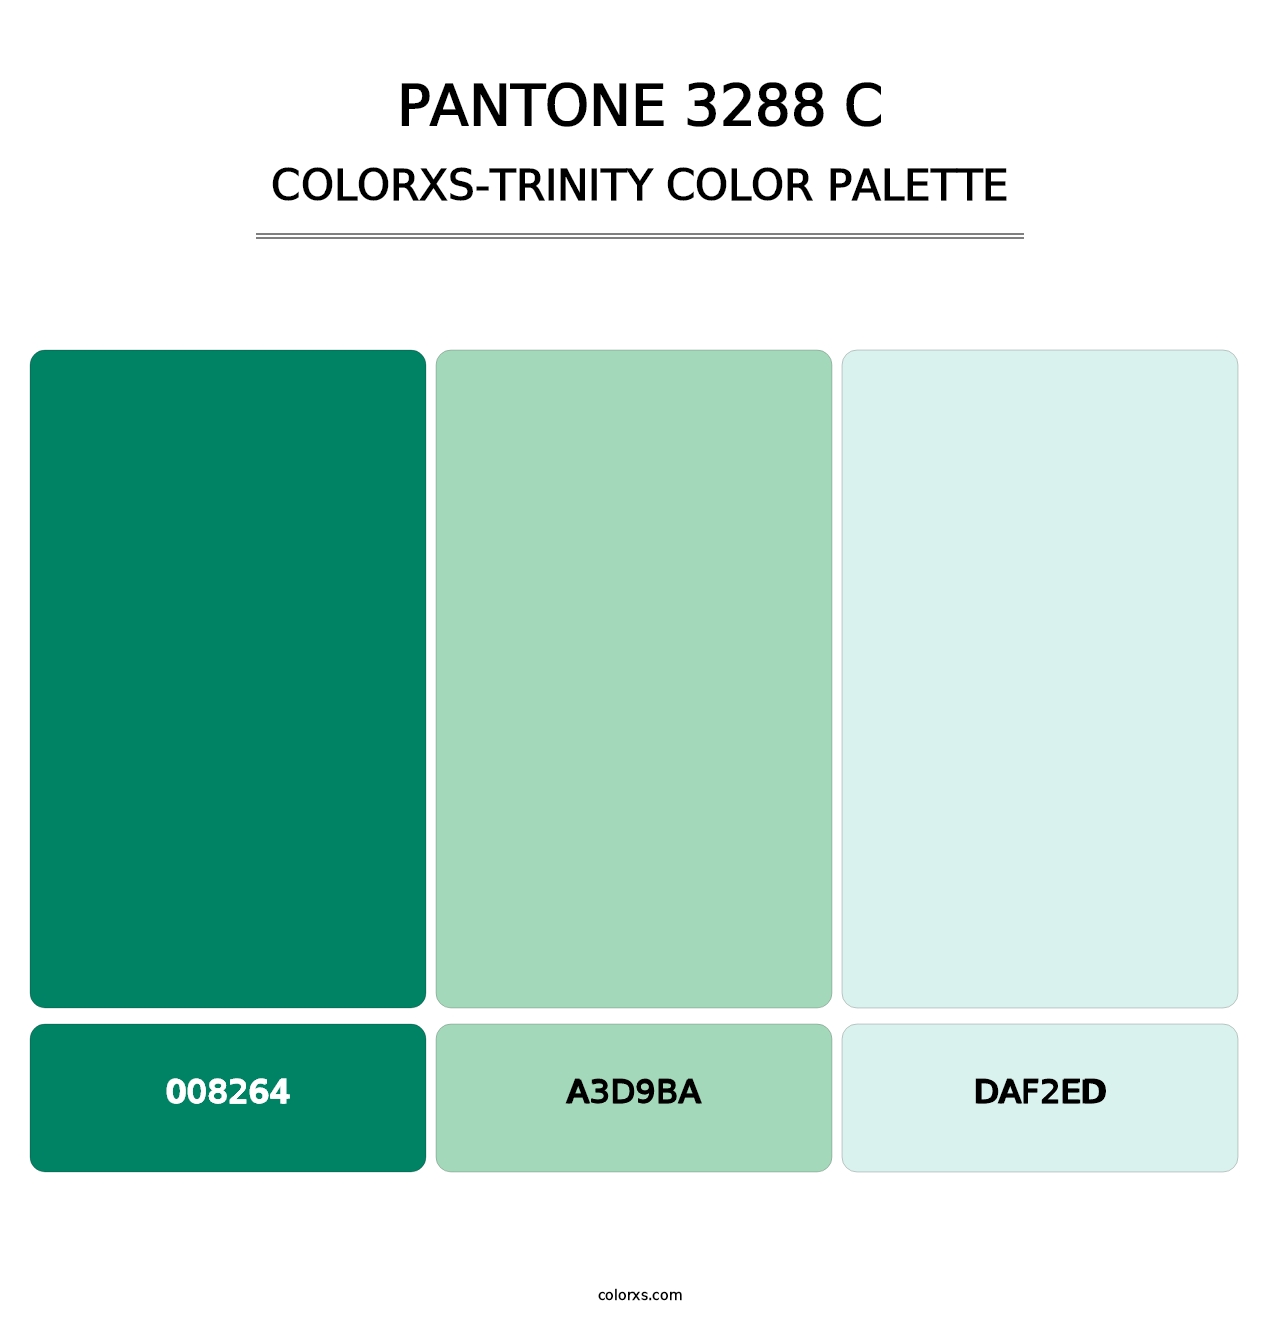 PANTONE 3288 C - Colorxs Trinity Palette